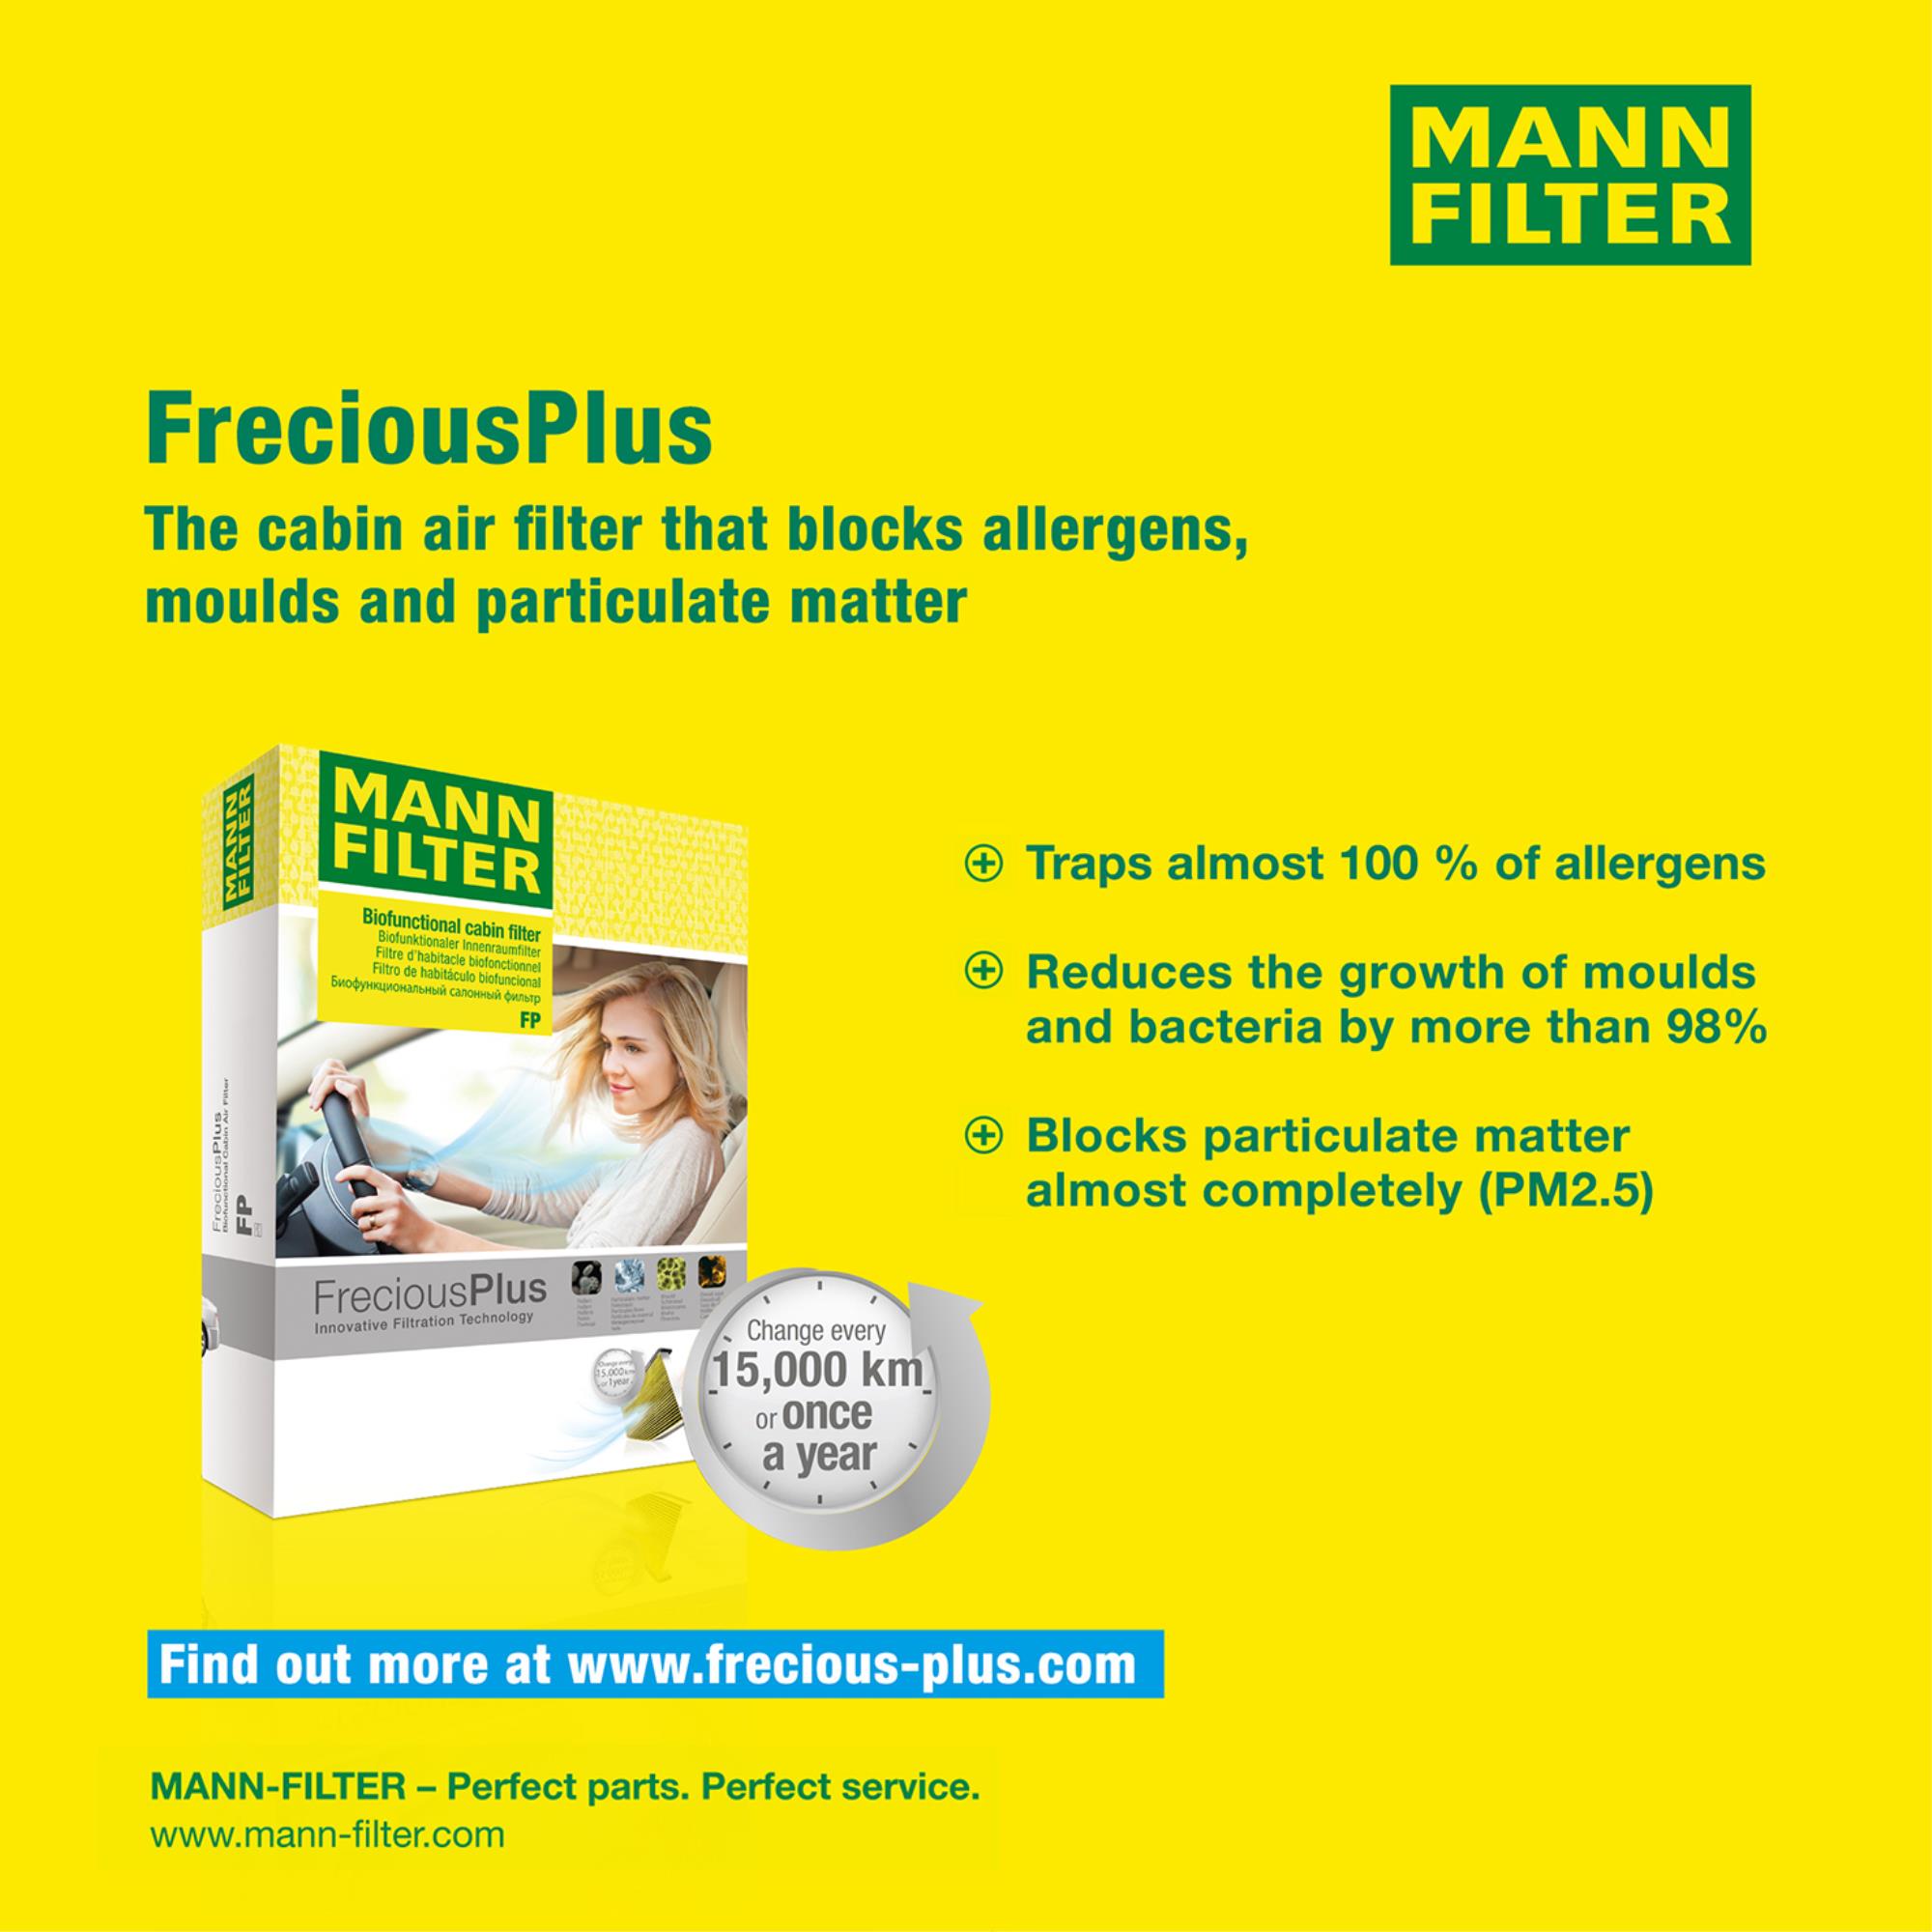 MANN-Filter Innenraumfilter Biofunctional für Allergiker FP 21 000-2